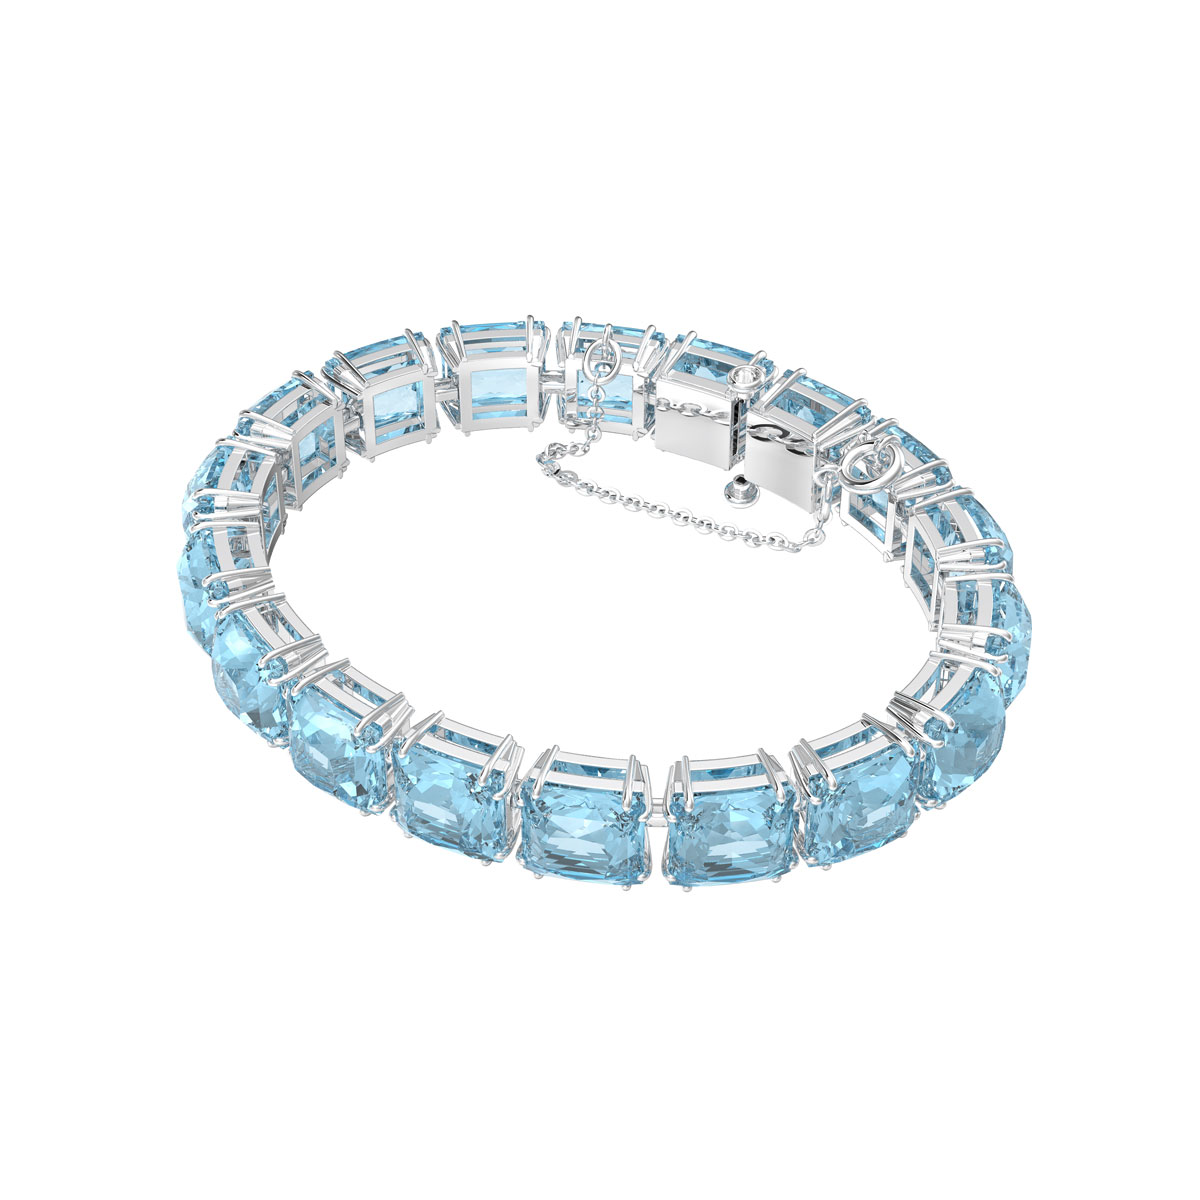 Swarovski Millenia Bracelet, Square Cut Crystals, Blue, Rhodium Plated